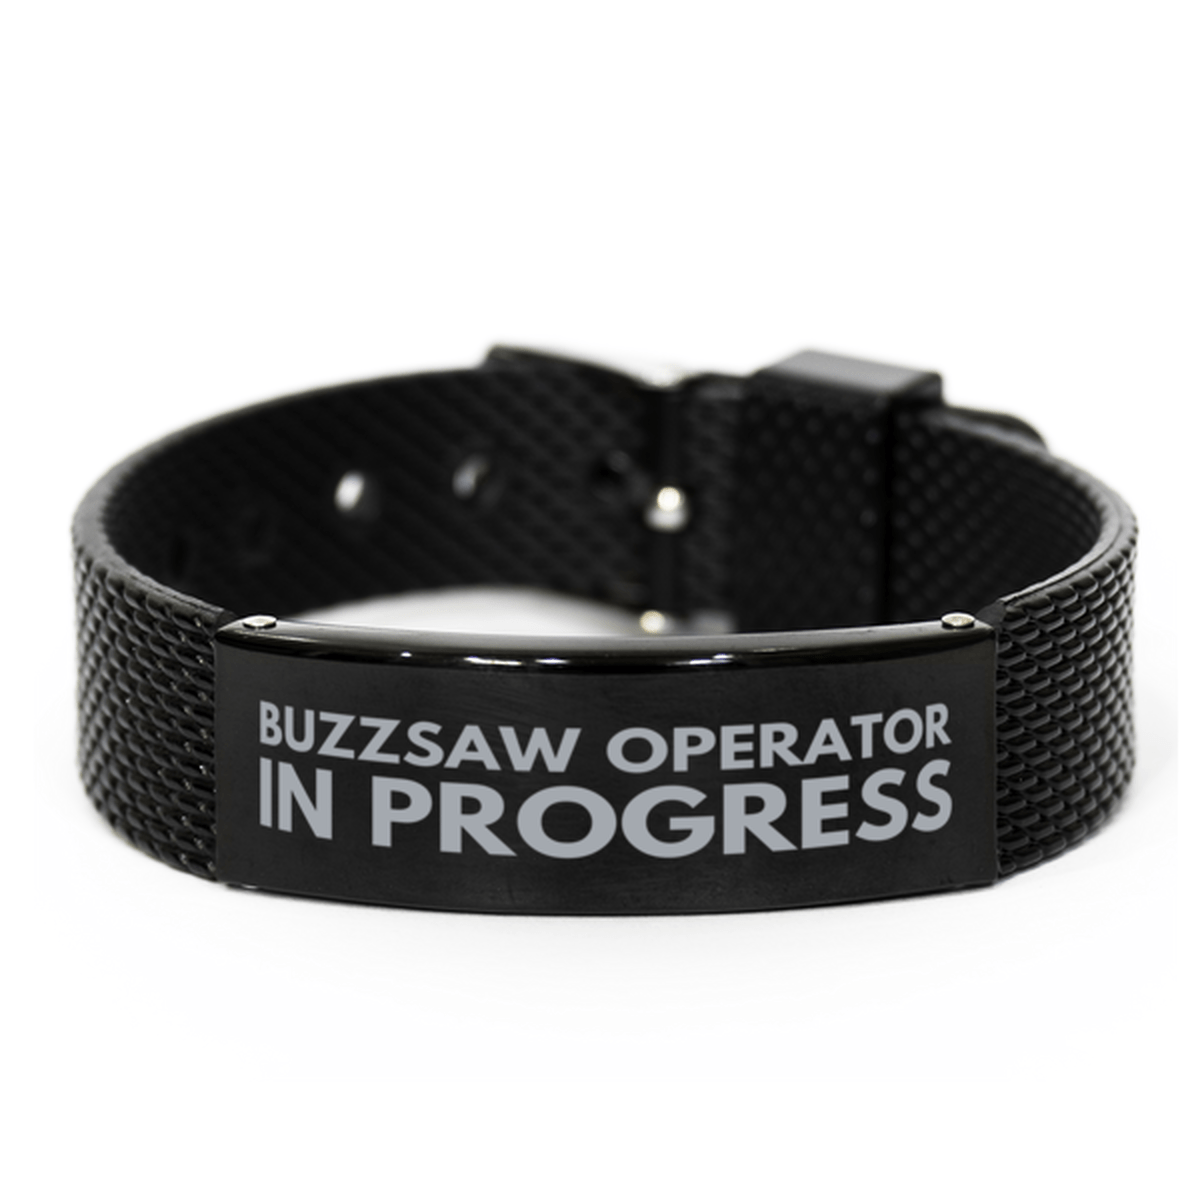 Inspirational Buzzsaw Operator Black Shark Mesh Bracelet, Buzzsaw Operator In Progress, Best Graduation Gifts for Students